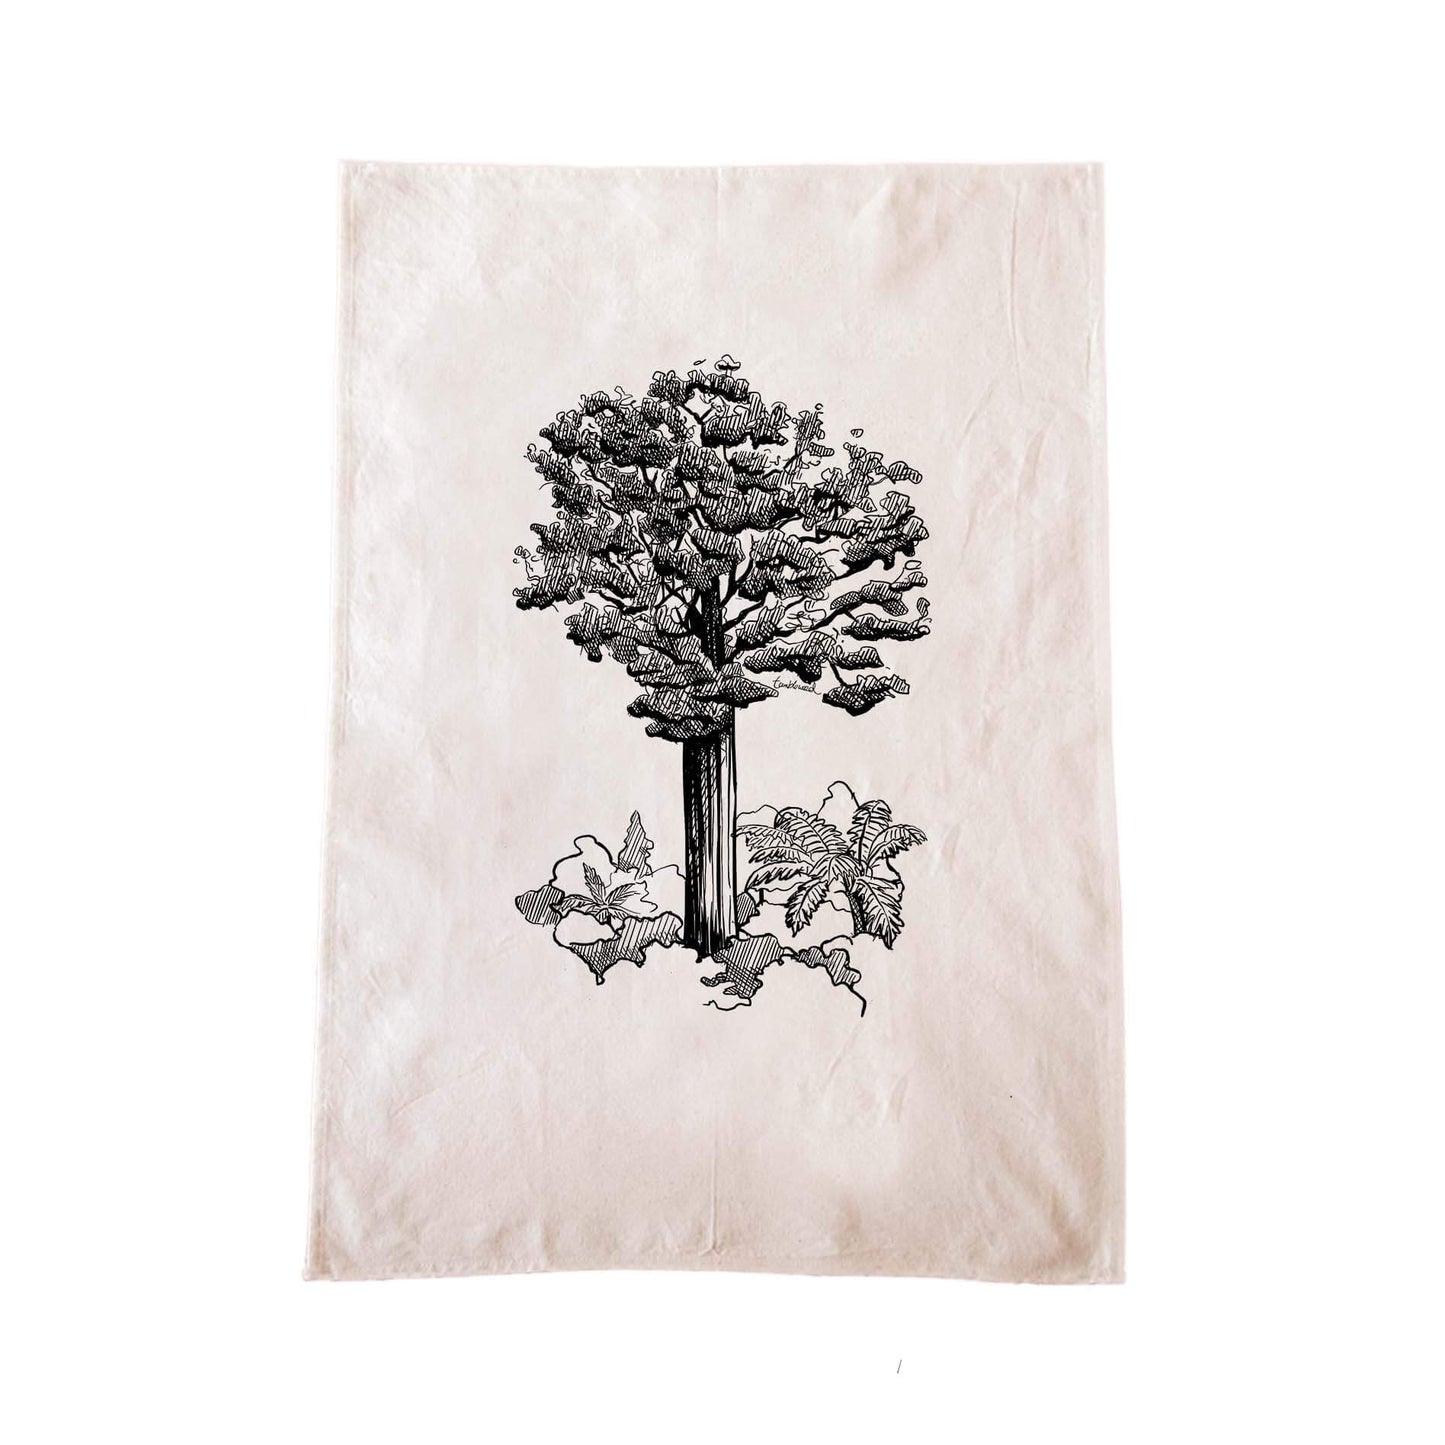 Off-white cotton tea towel with a screen printed Kauri design.